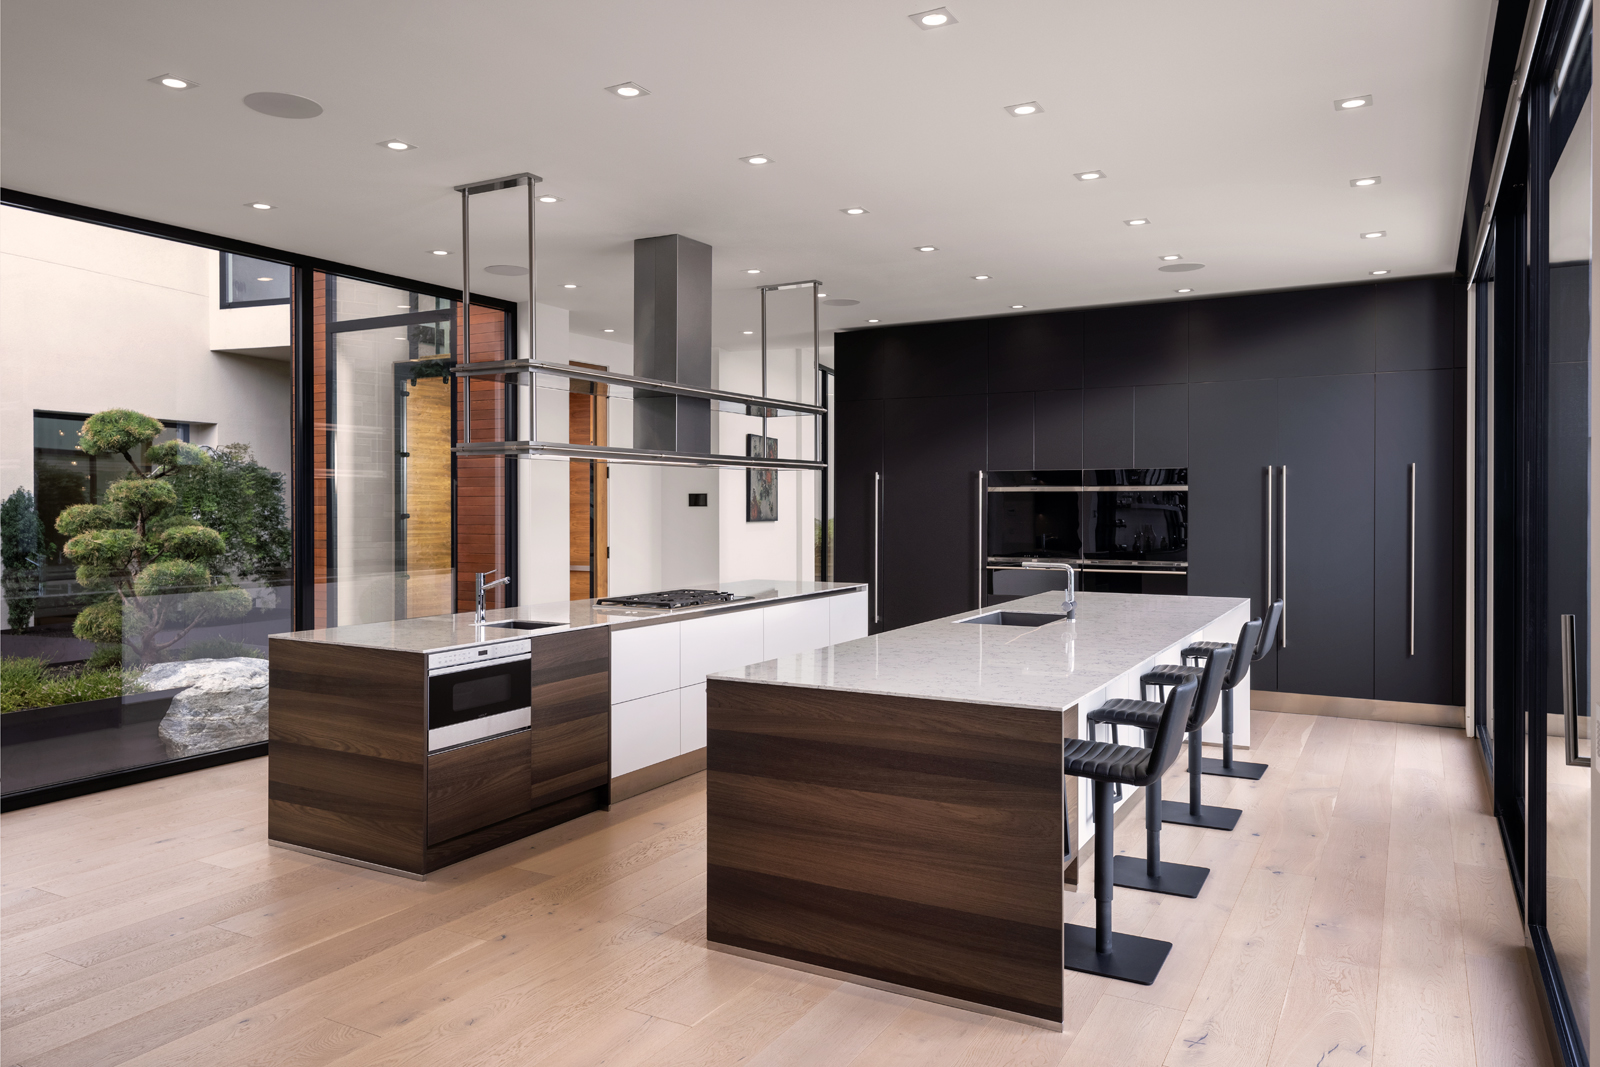 Architectural photograph of luxury kitchen interior